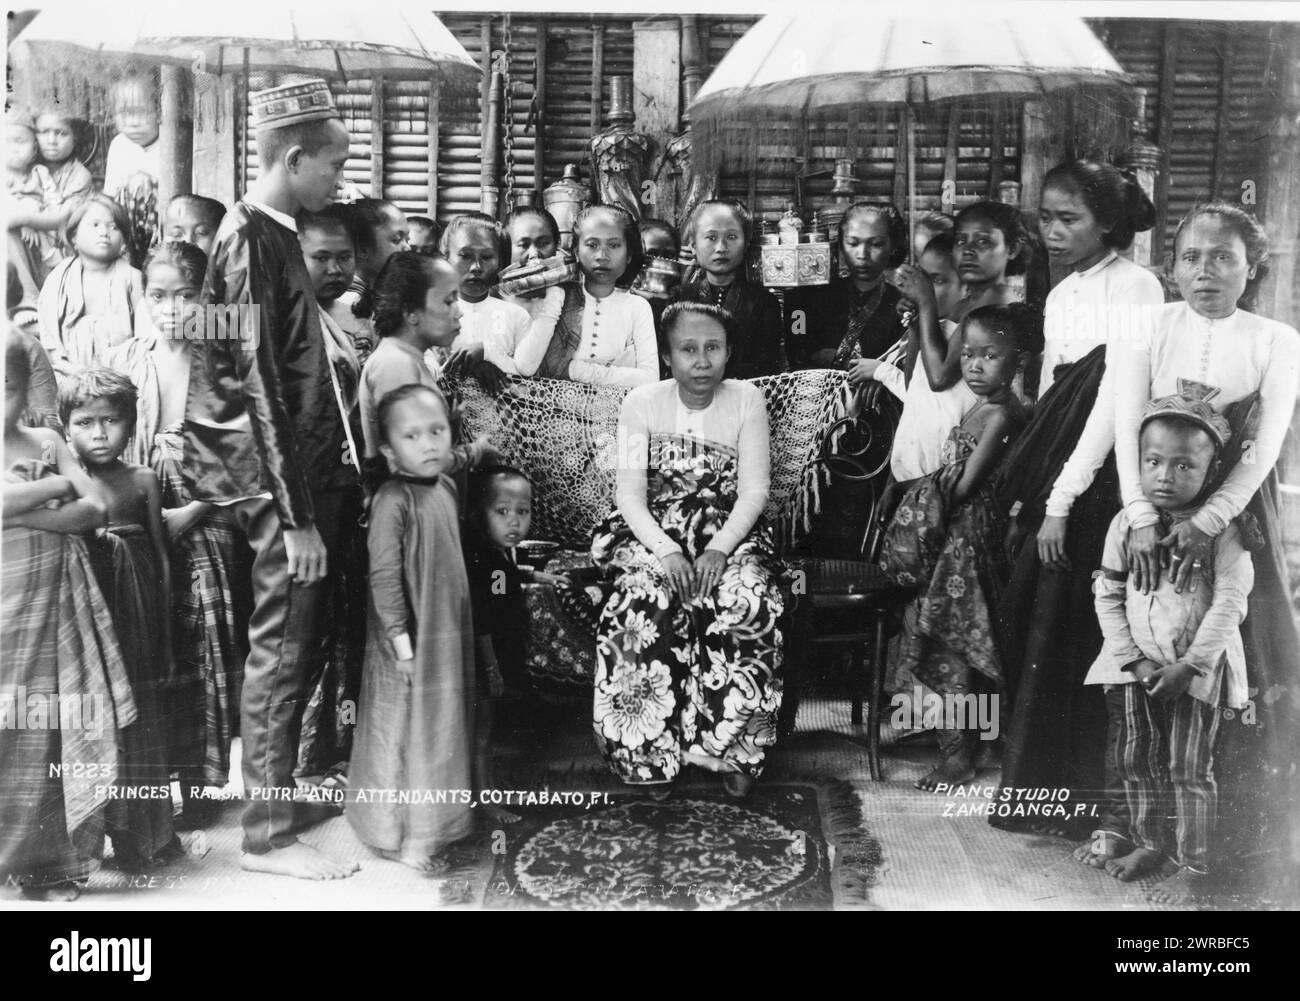 Princes sic Radcai.e. Radja? Putrie and attendants, Cottabatoi.e. Cotabato, P.I., Piang Studio, Zamboanga, P.I., Princess Radja(?) Putri, wife of the Sultan Maguguina, and attendants, Cotabato, Philippine Islands., between ca. 1900 and 1923, Princesses, Philippines, Cotabato, 1900-1930, Group portraits, 1900-1930., Portrait photographs, 1900-1930, Group portraits, 1900-1930, 1 photographic print Stock Photo